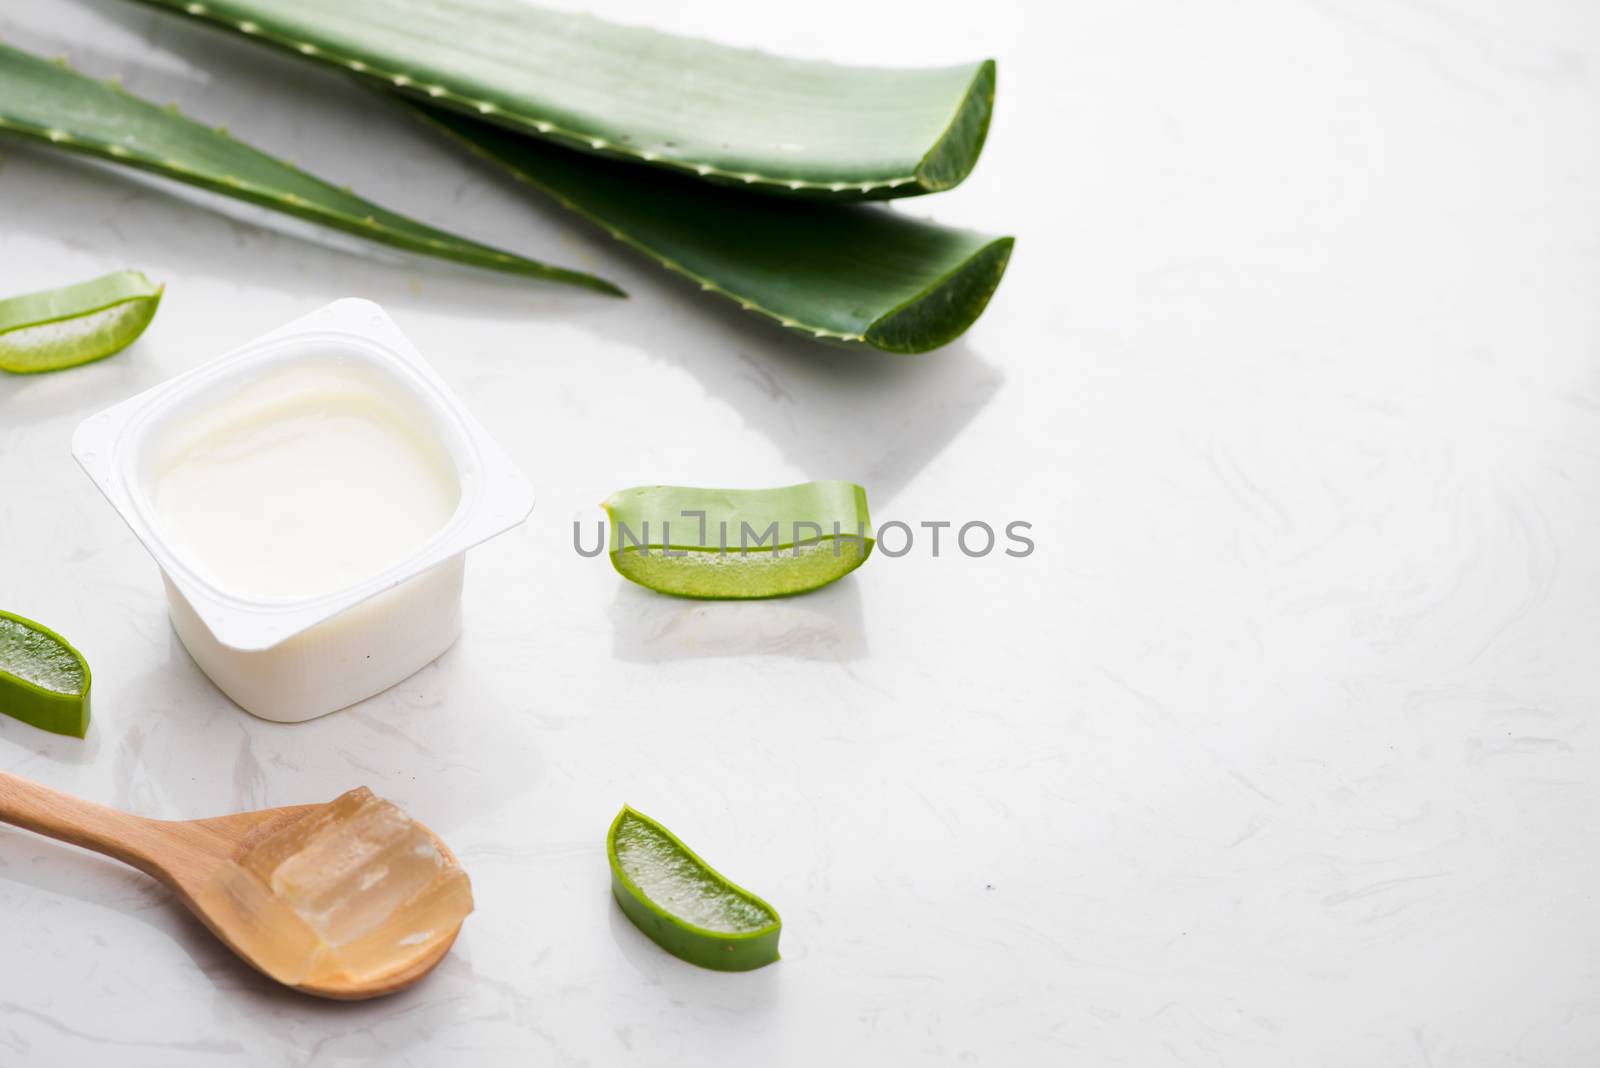 Aloe vera yogurt with fresh leaves on a wooden table